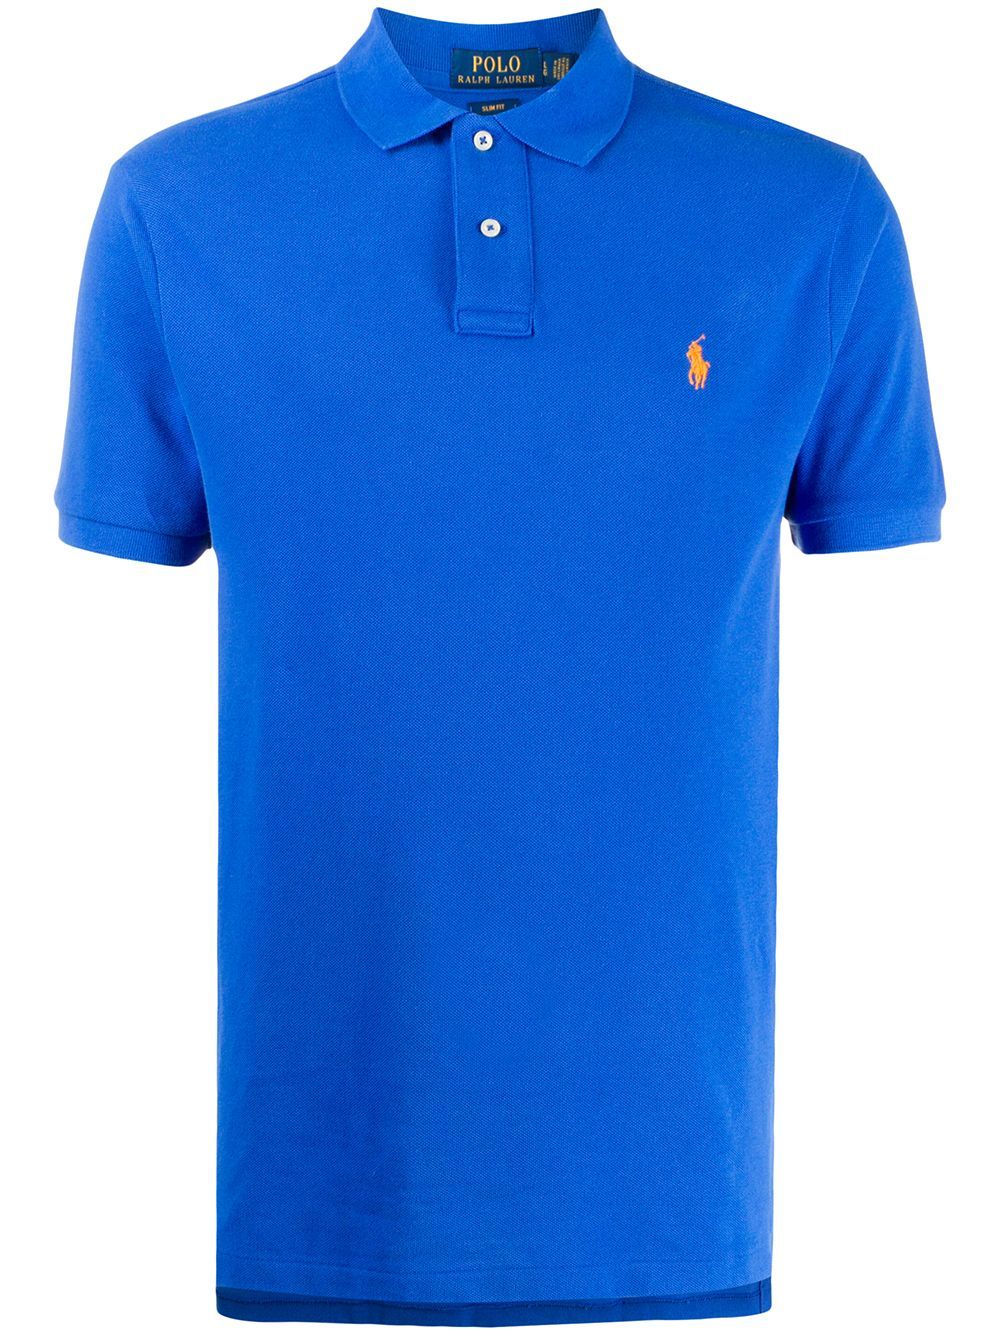 Polo Ralph Lauren Blue Polo Shirt